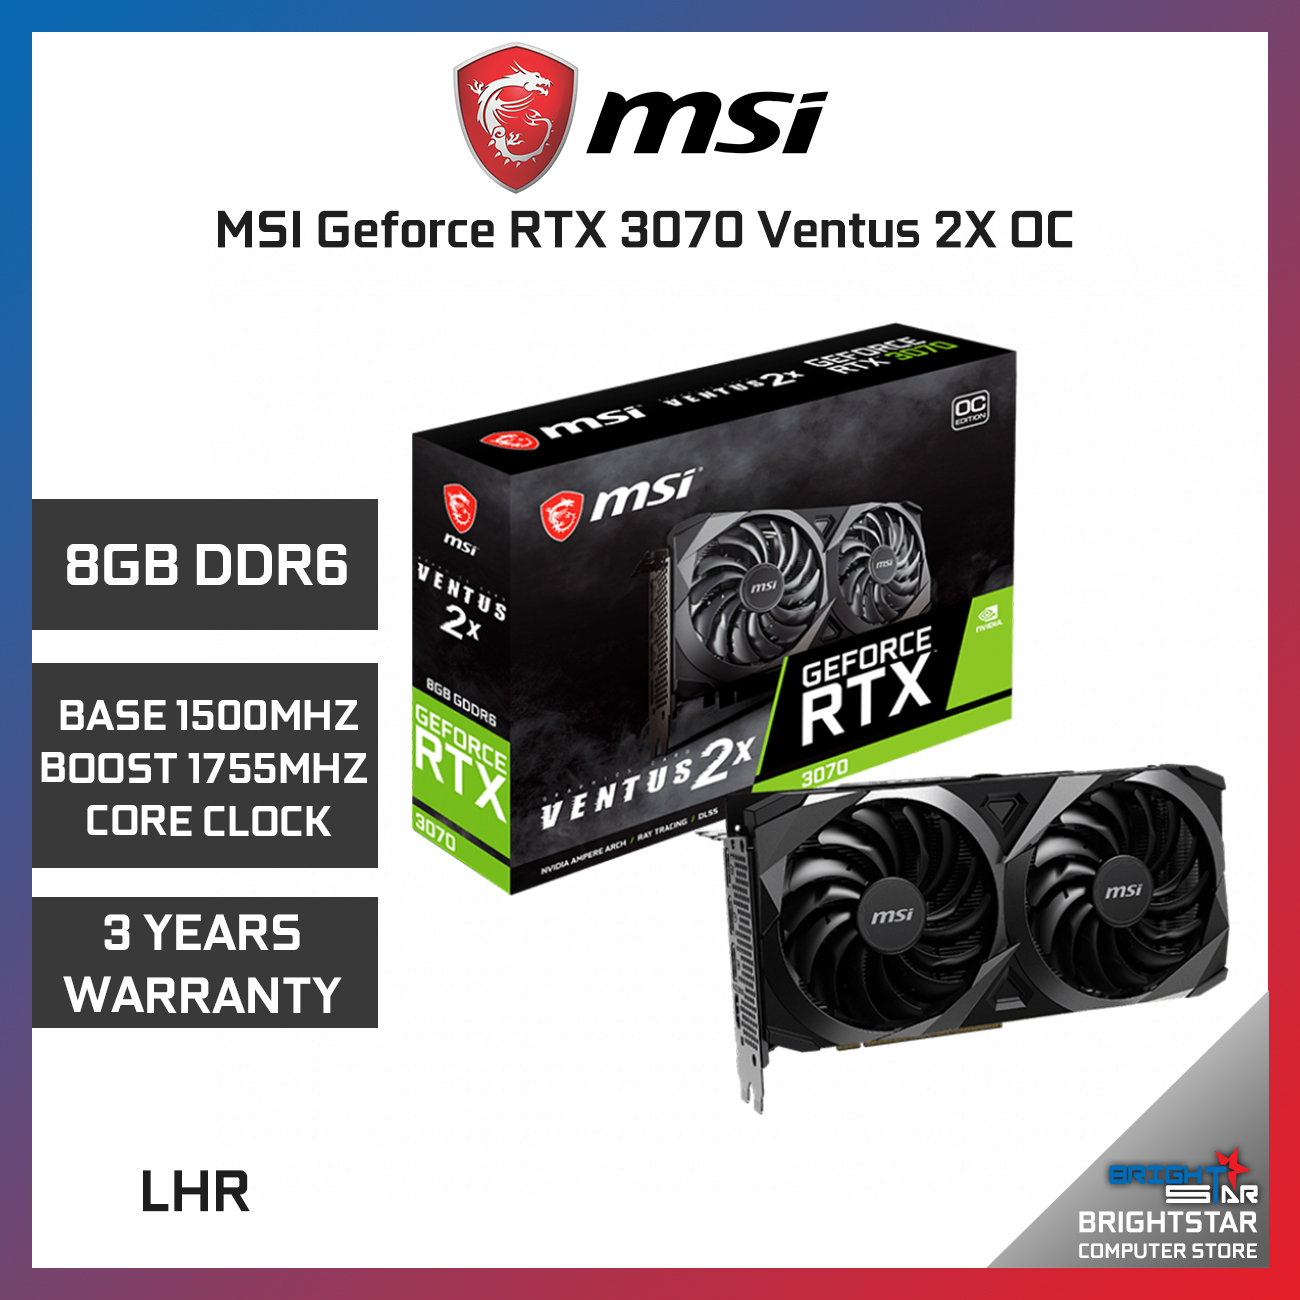 MSI Geforce RTX 3070 Ventus 2X OC 8G DDR6 Graphic Card ⋆ Brightstar Computer